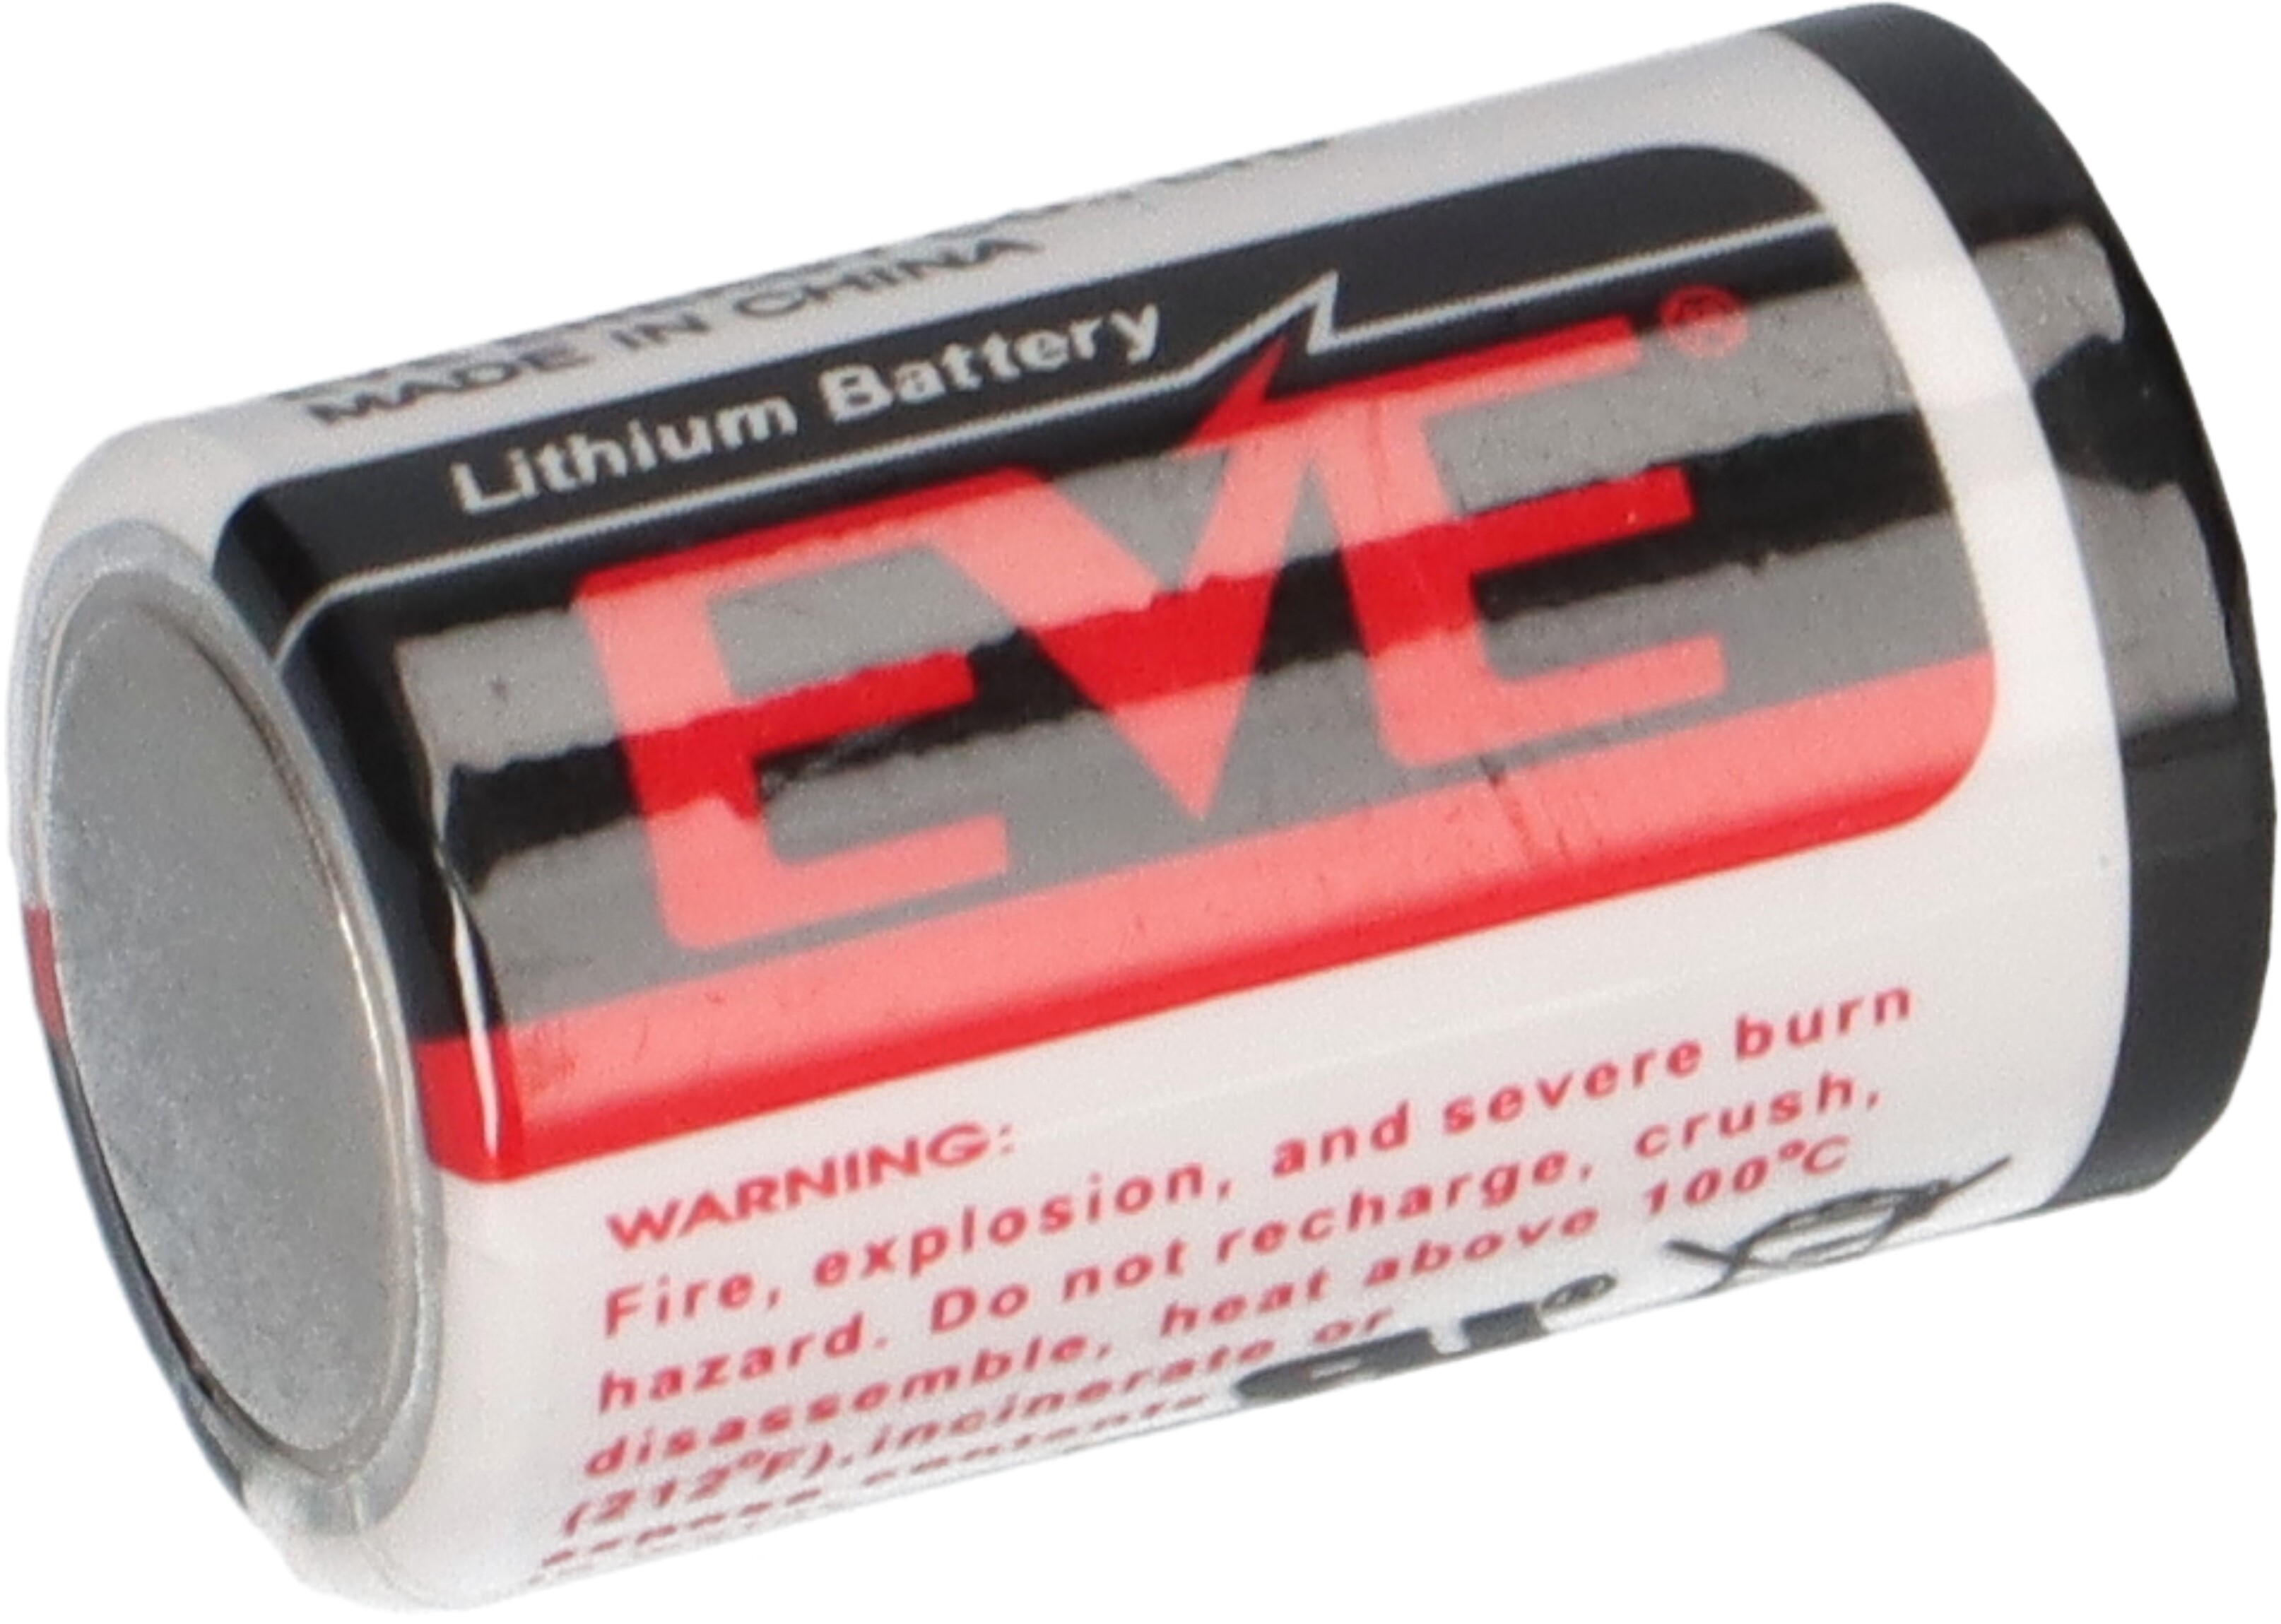 EVE ER14250/PFR / 1/2AA - 3.6V 3 pin - AAA / 1/2AA 14250 - Lithium